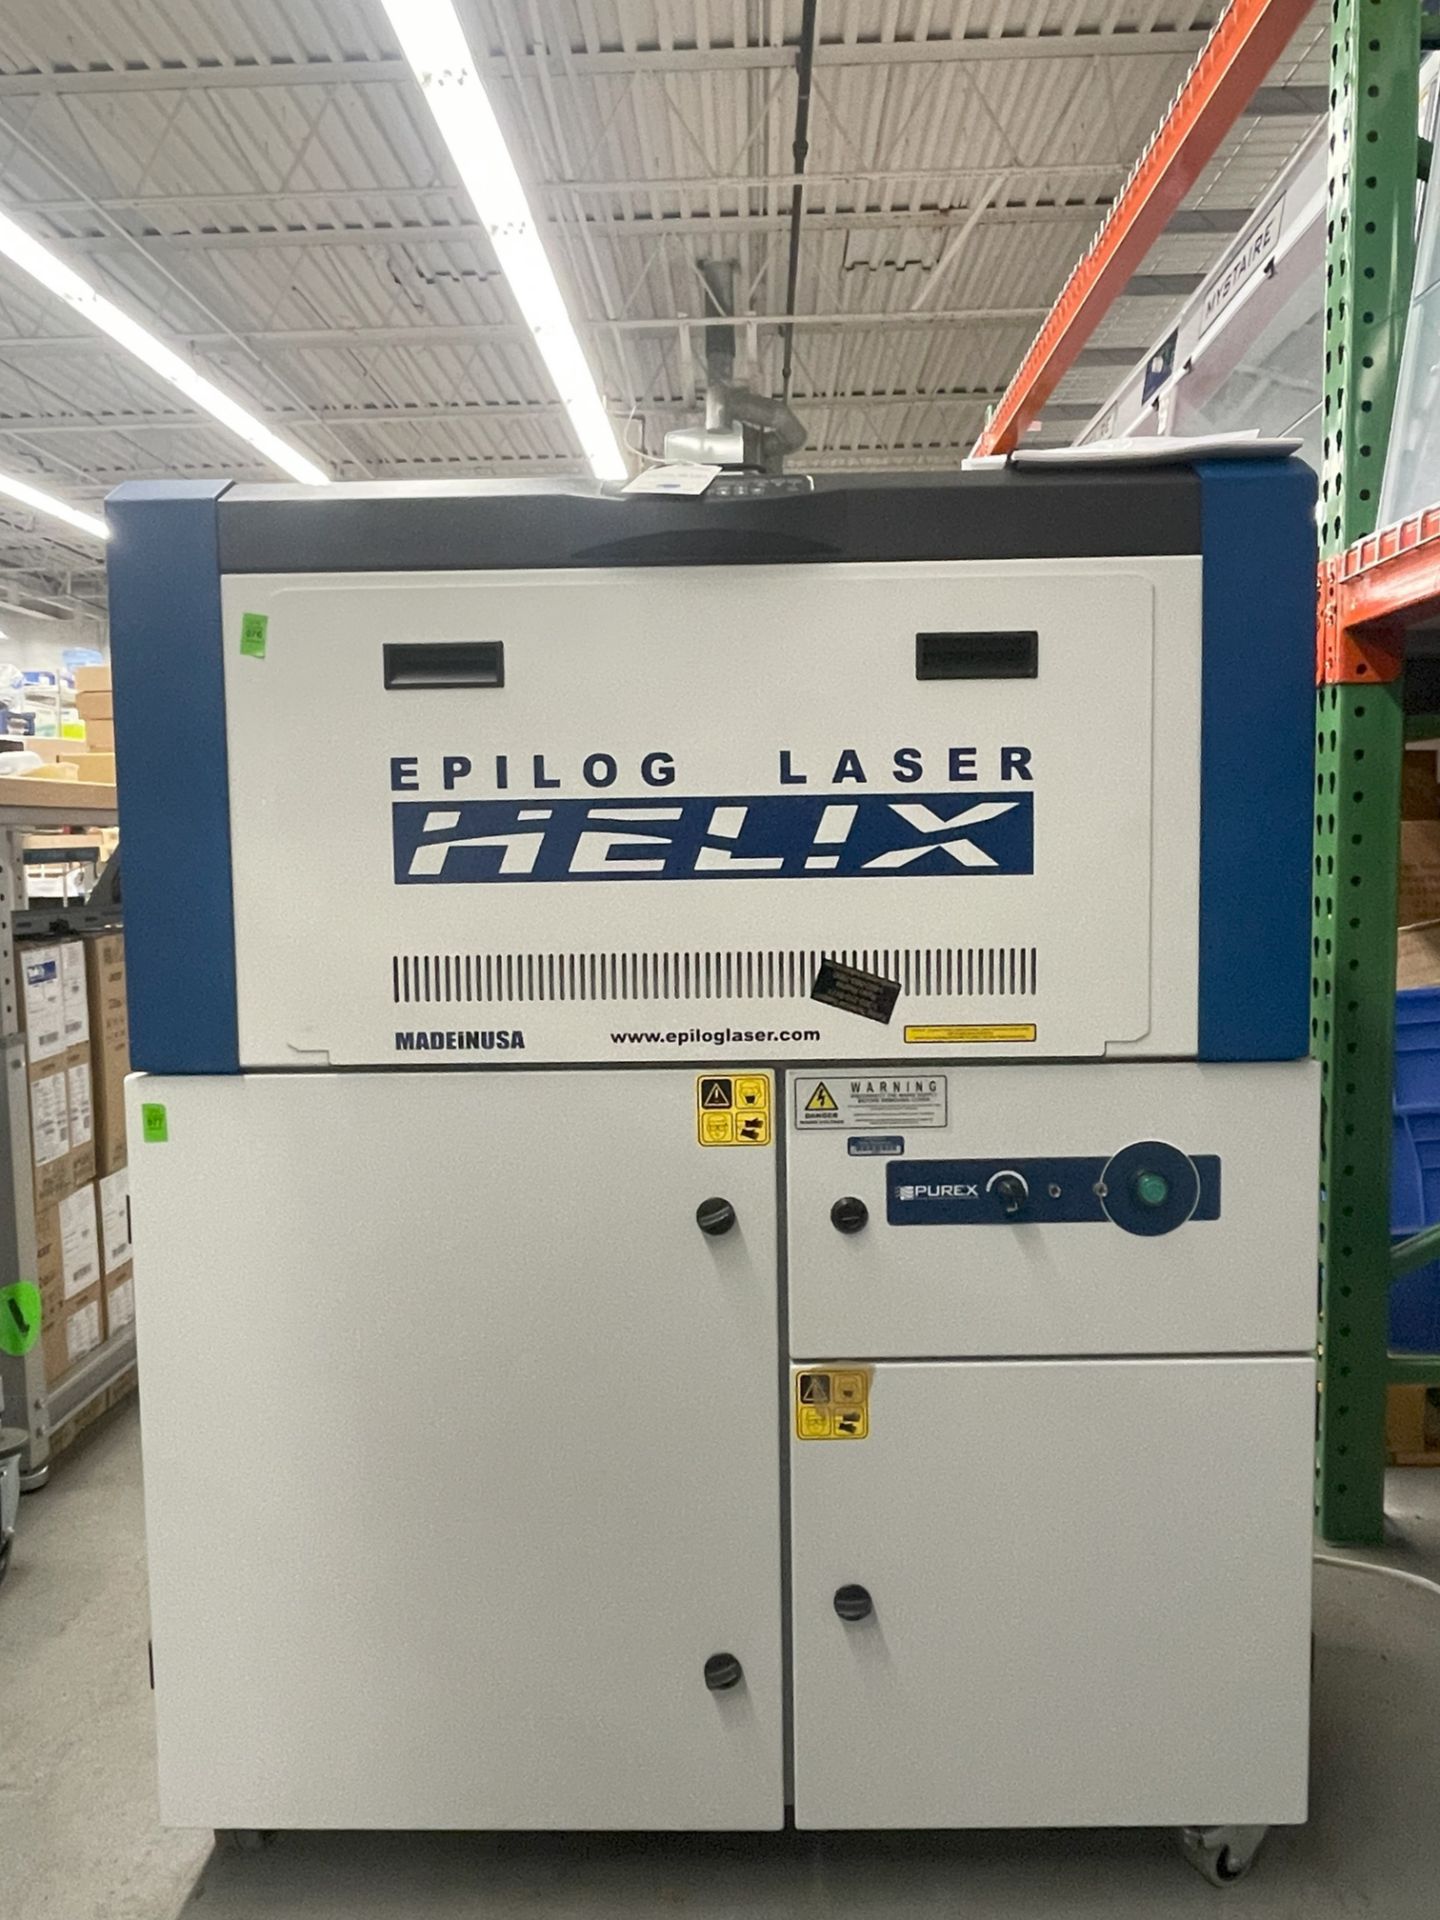 2018 Epilog Helix Laser Engraving Machine #8000, Class 2, 50 Watt, 24" x 18" w/ Manual, Purex Fume - Image 5 of 5